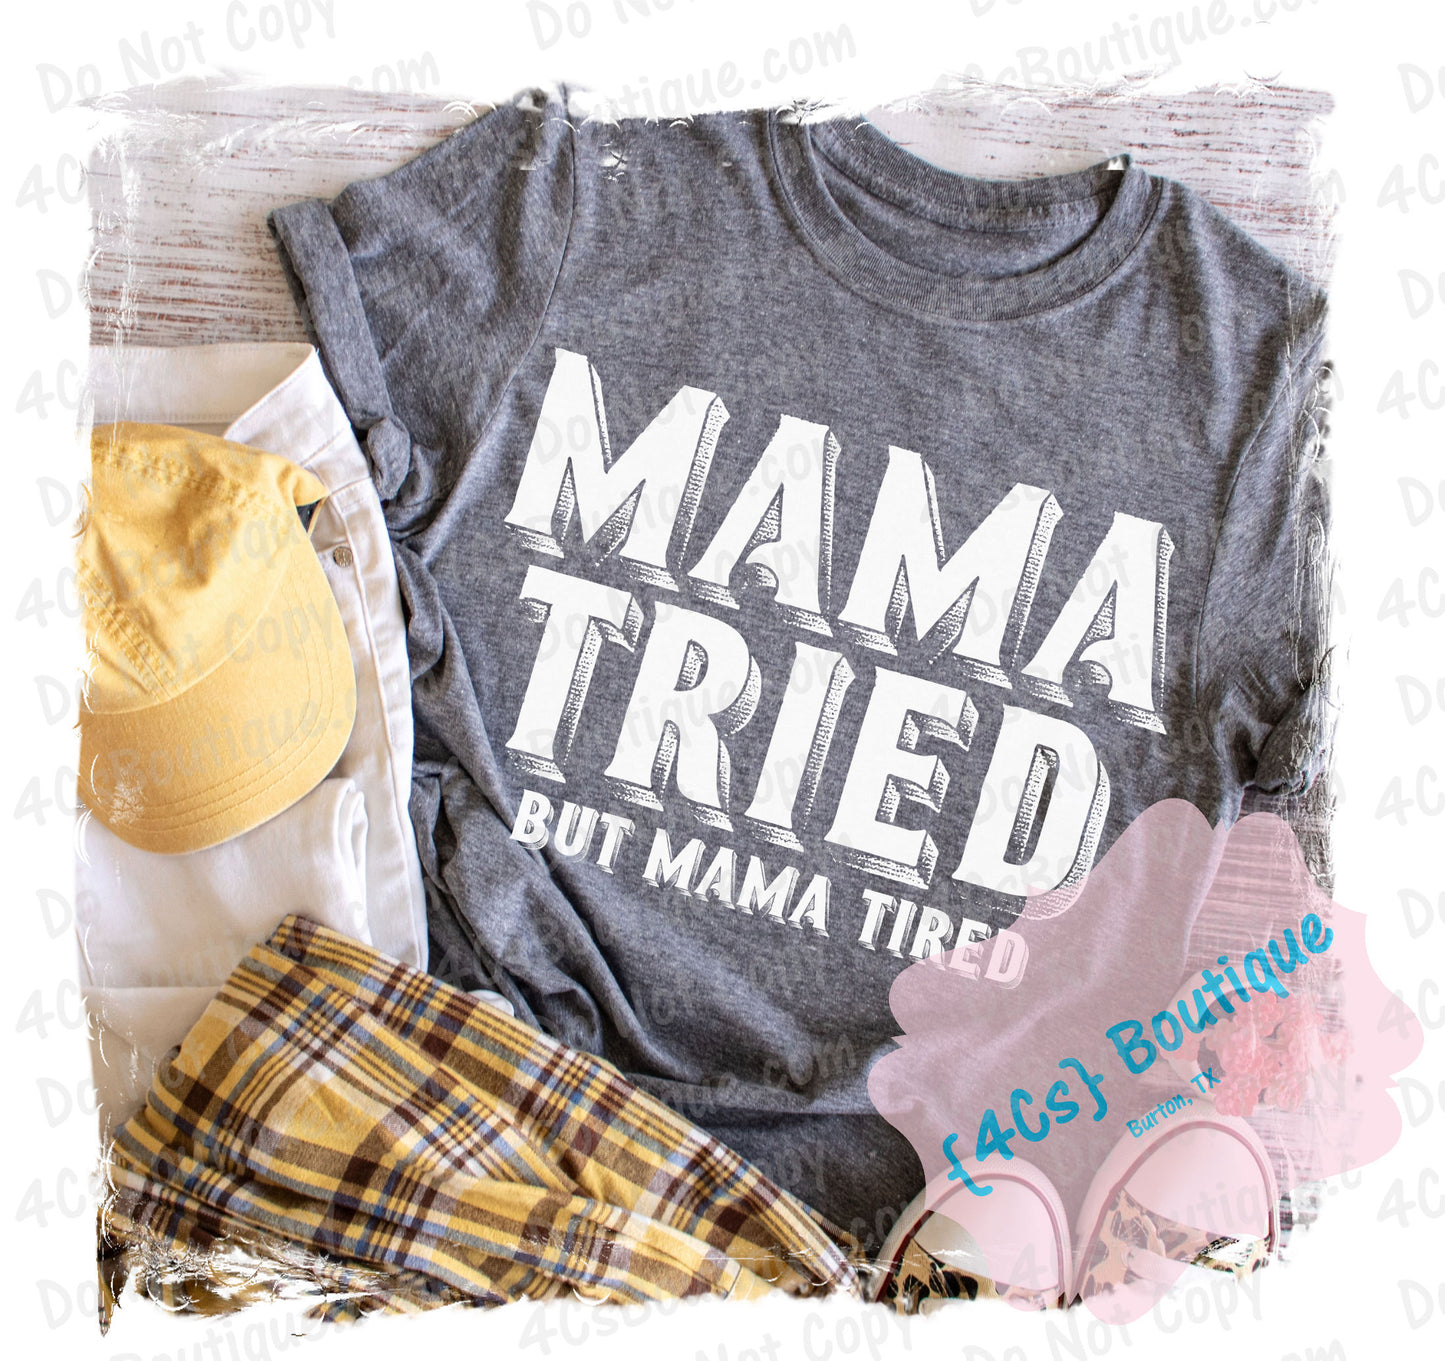 Mama Tried But Mama Tired